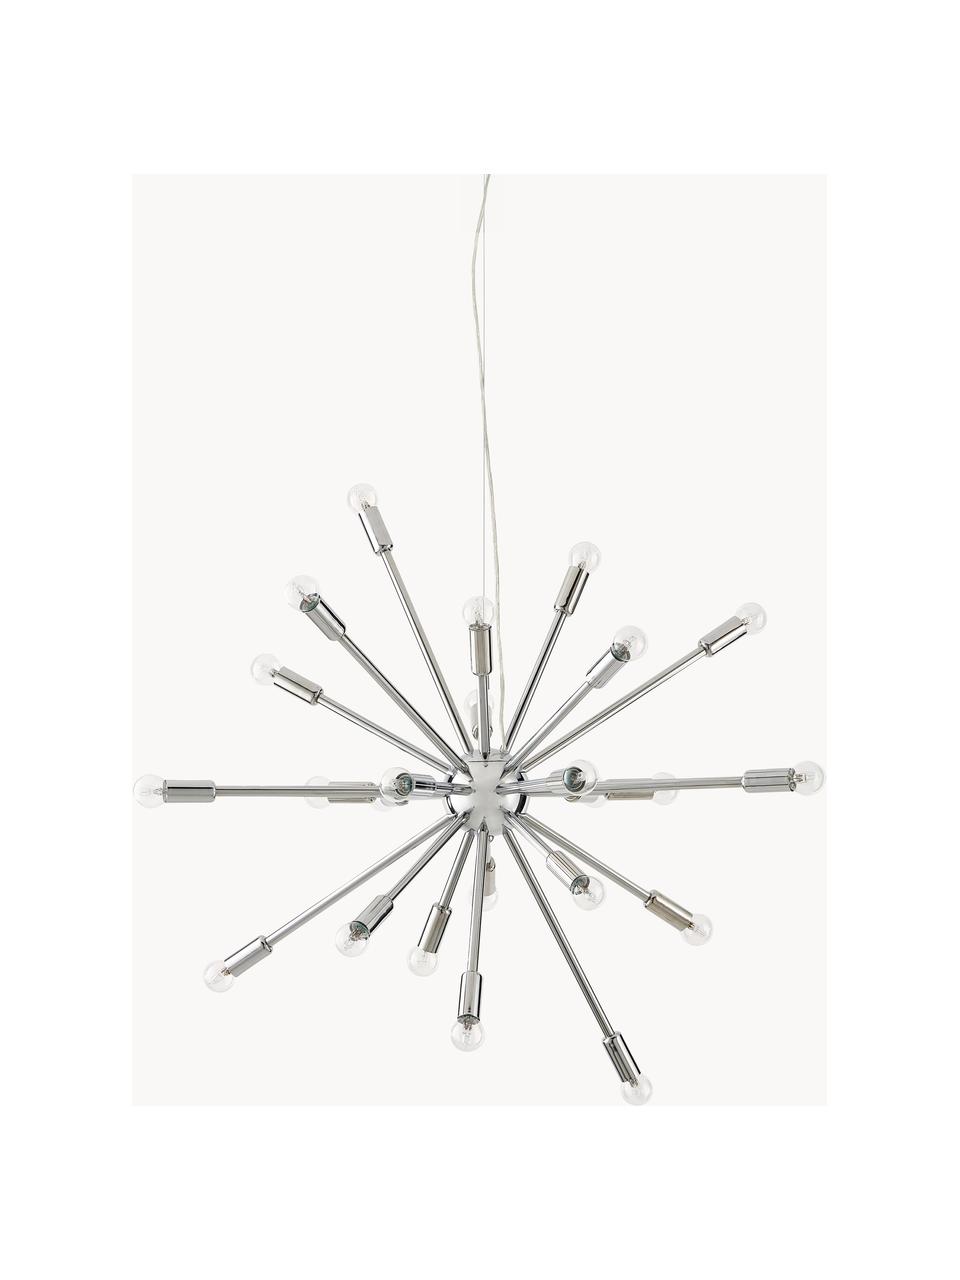 Grote hanglamp Spike, Lampenkap: verchroomd metaal, Zilverkleurig, Ø 90 cm